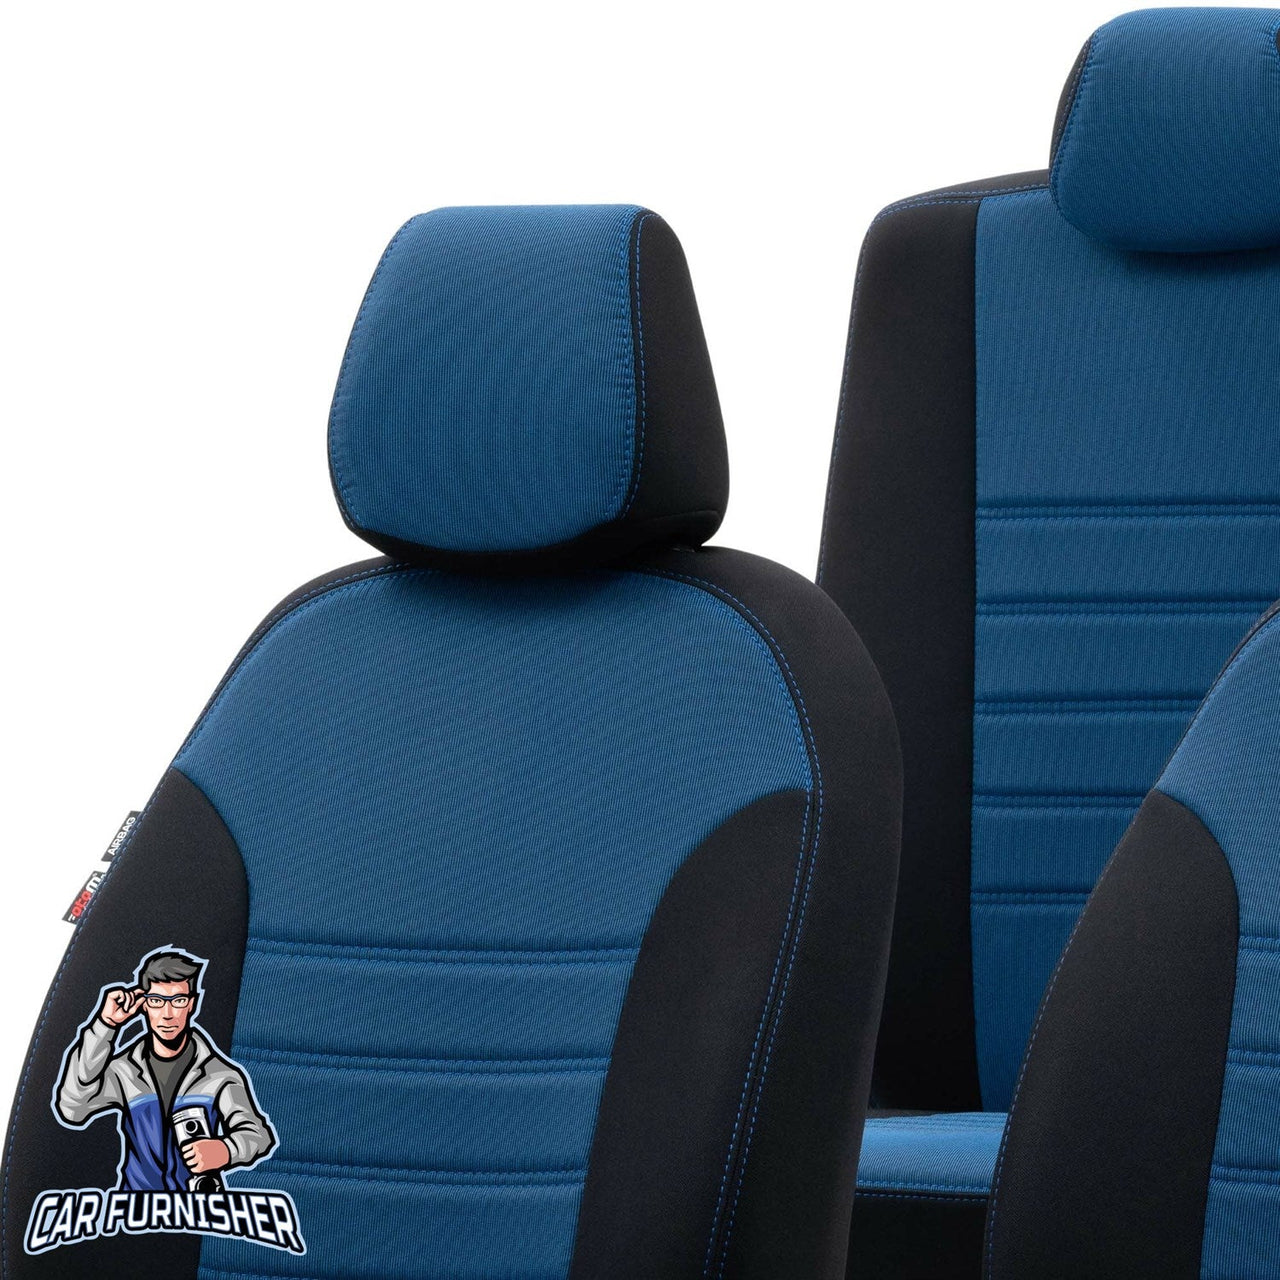 Volkswagen Caddy Seat Cover Original Jacquard Design Blue Jacquard Fabric